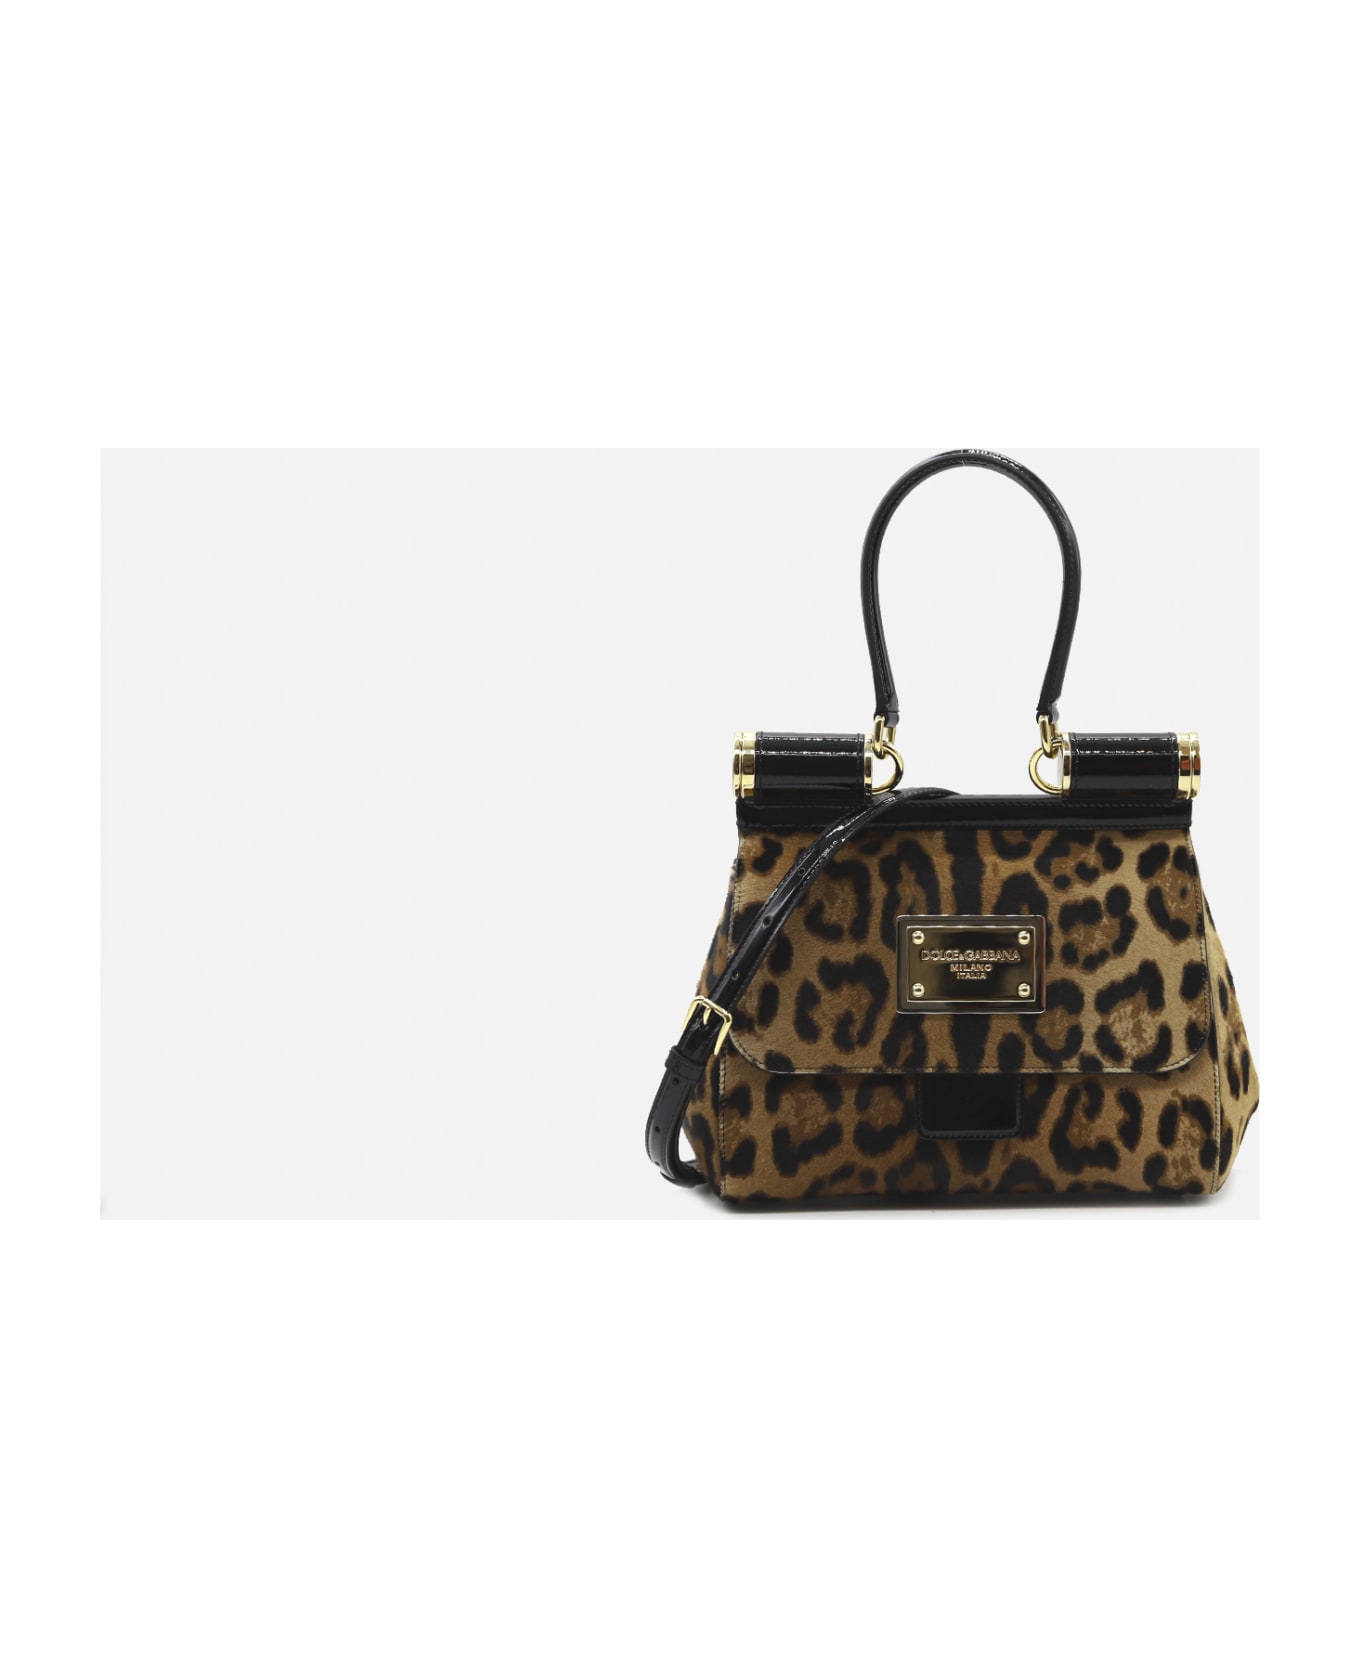 Dolce & Gabbana 90es Sicily Medium Leather Bag With All-over Leo Print - Leopard